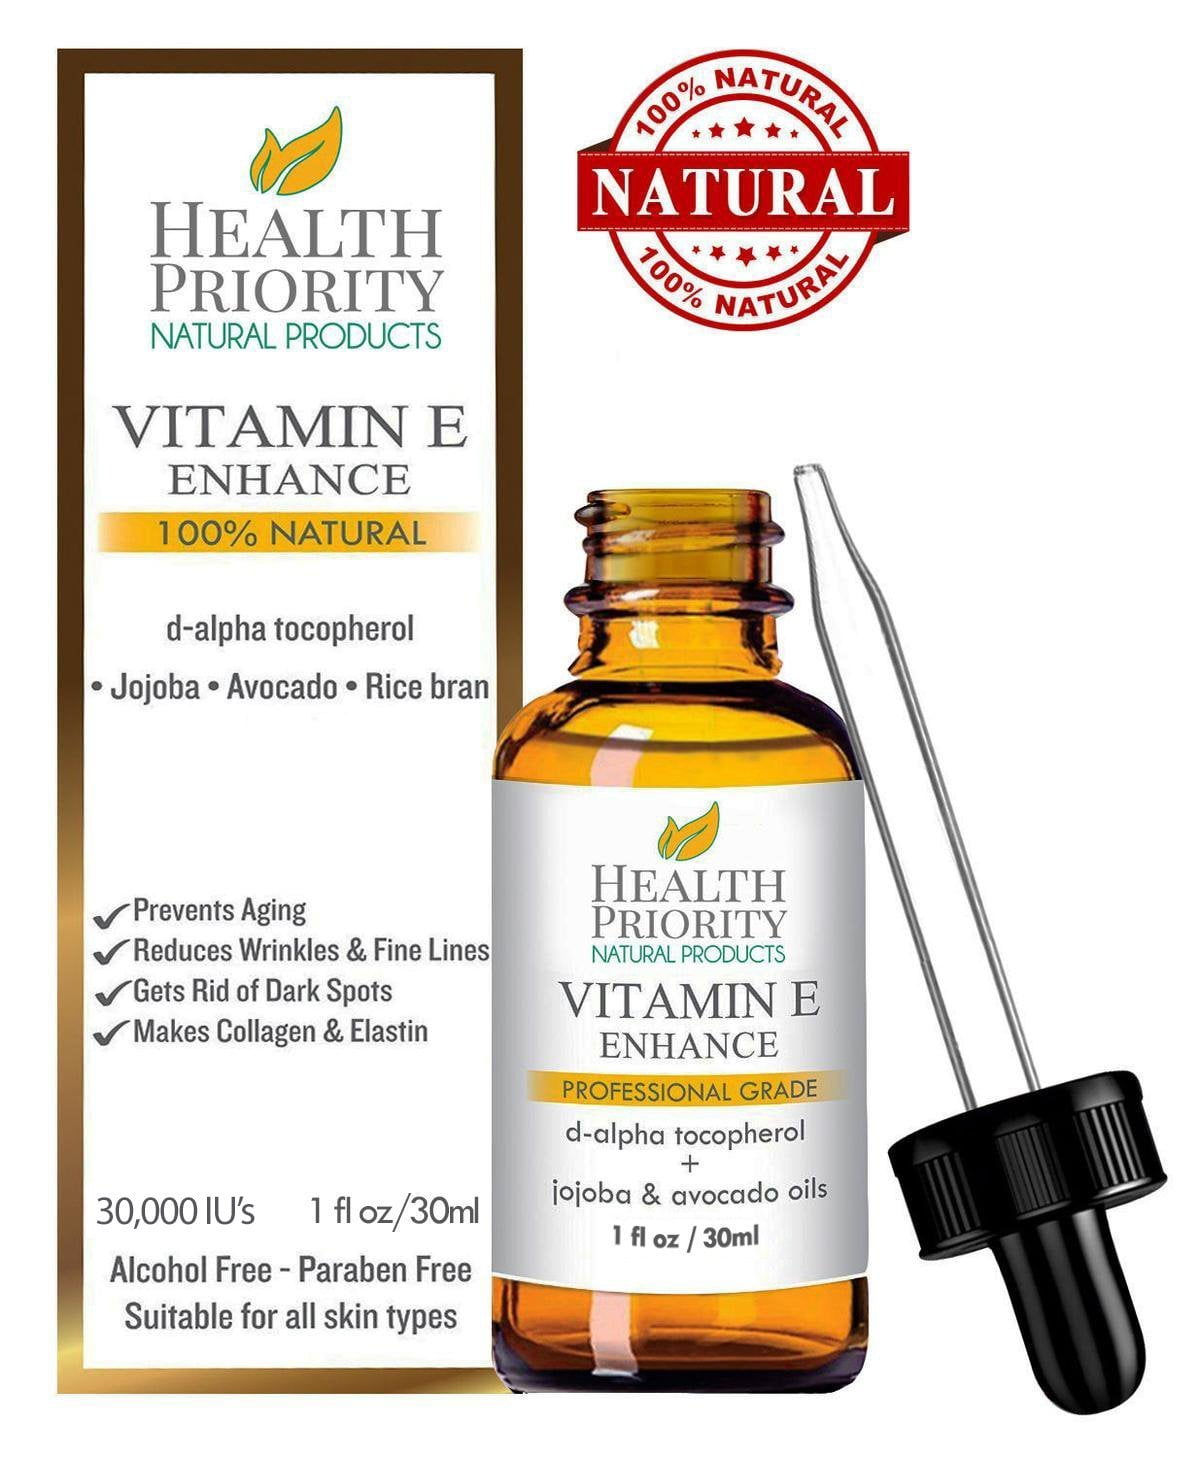 Benefits of Vitamin E for Your Skin: Vitamin E Oil Benefits